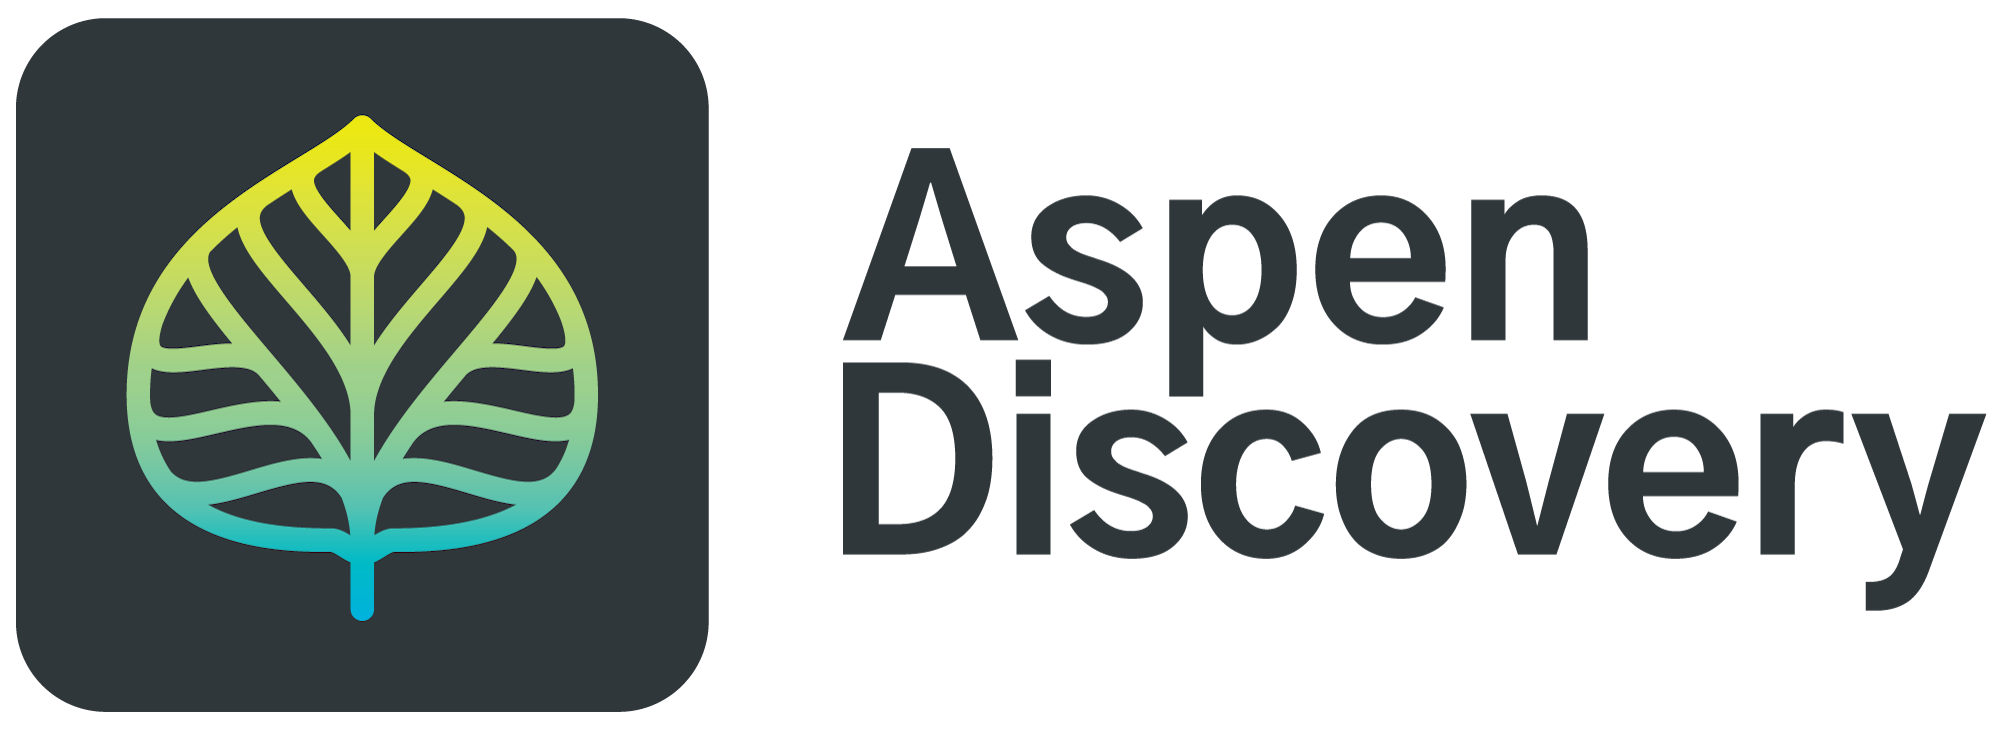 Aspen Discovery